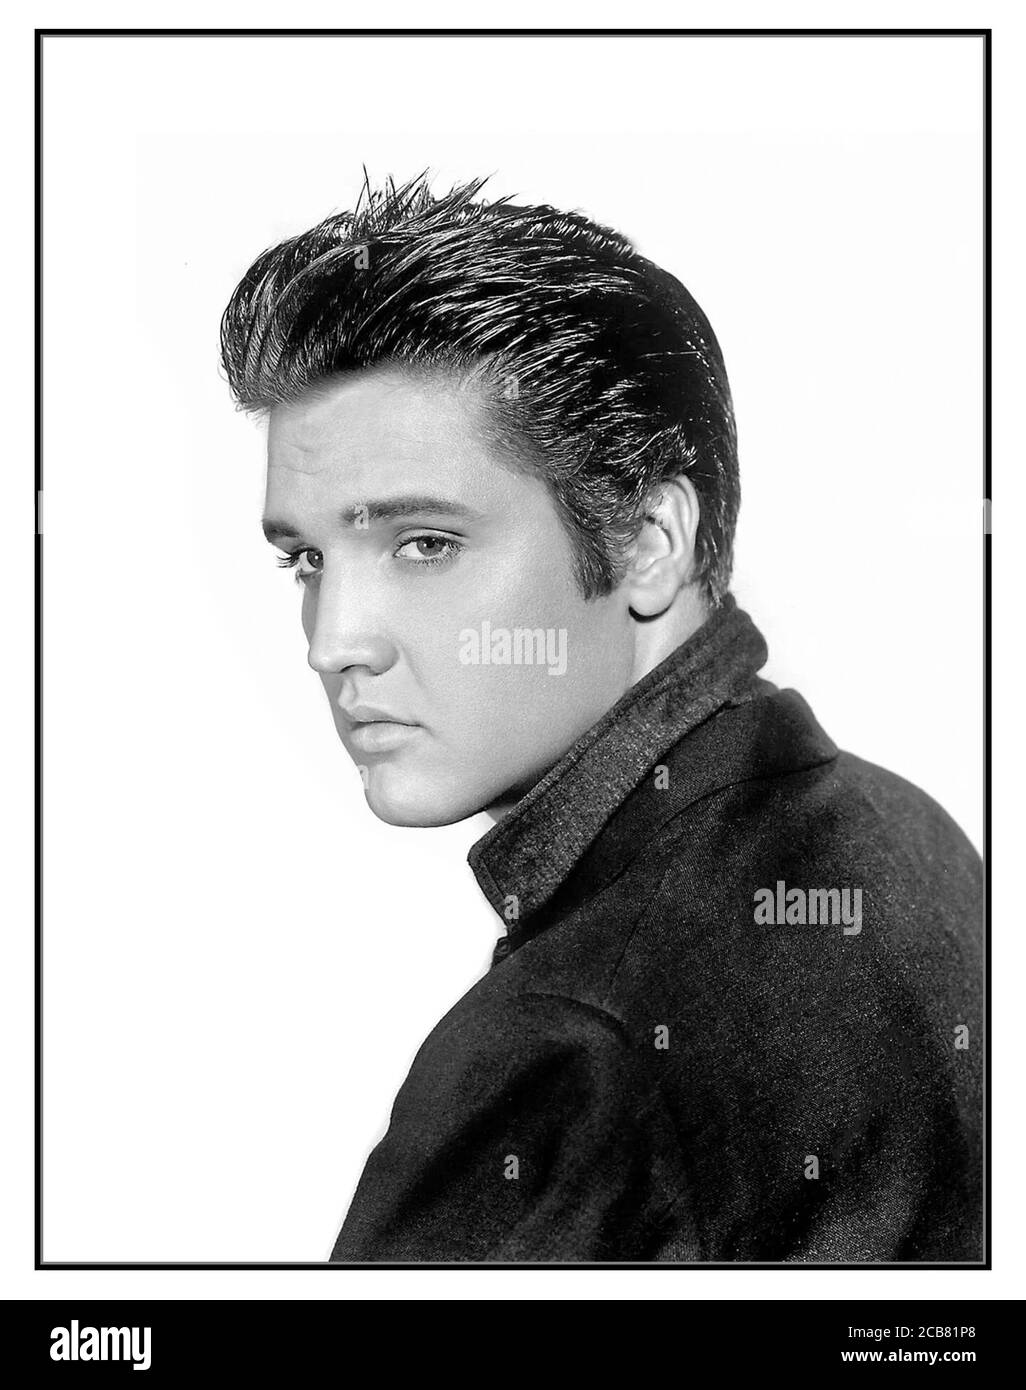 ELVIS PRESLEY '50's Vintage 1950's Hollywood film studio presse portrait promotionnel encore d'Elvis Presley 'The King' Banque D'Images